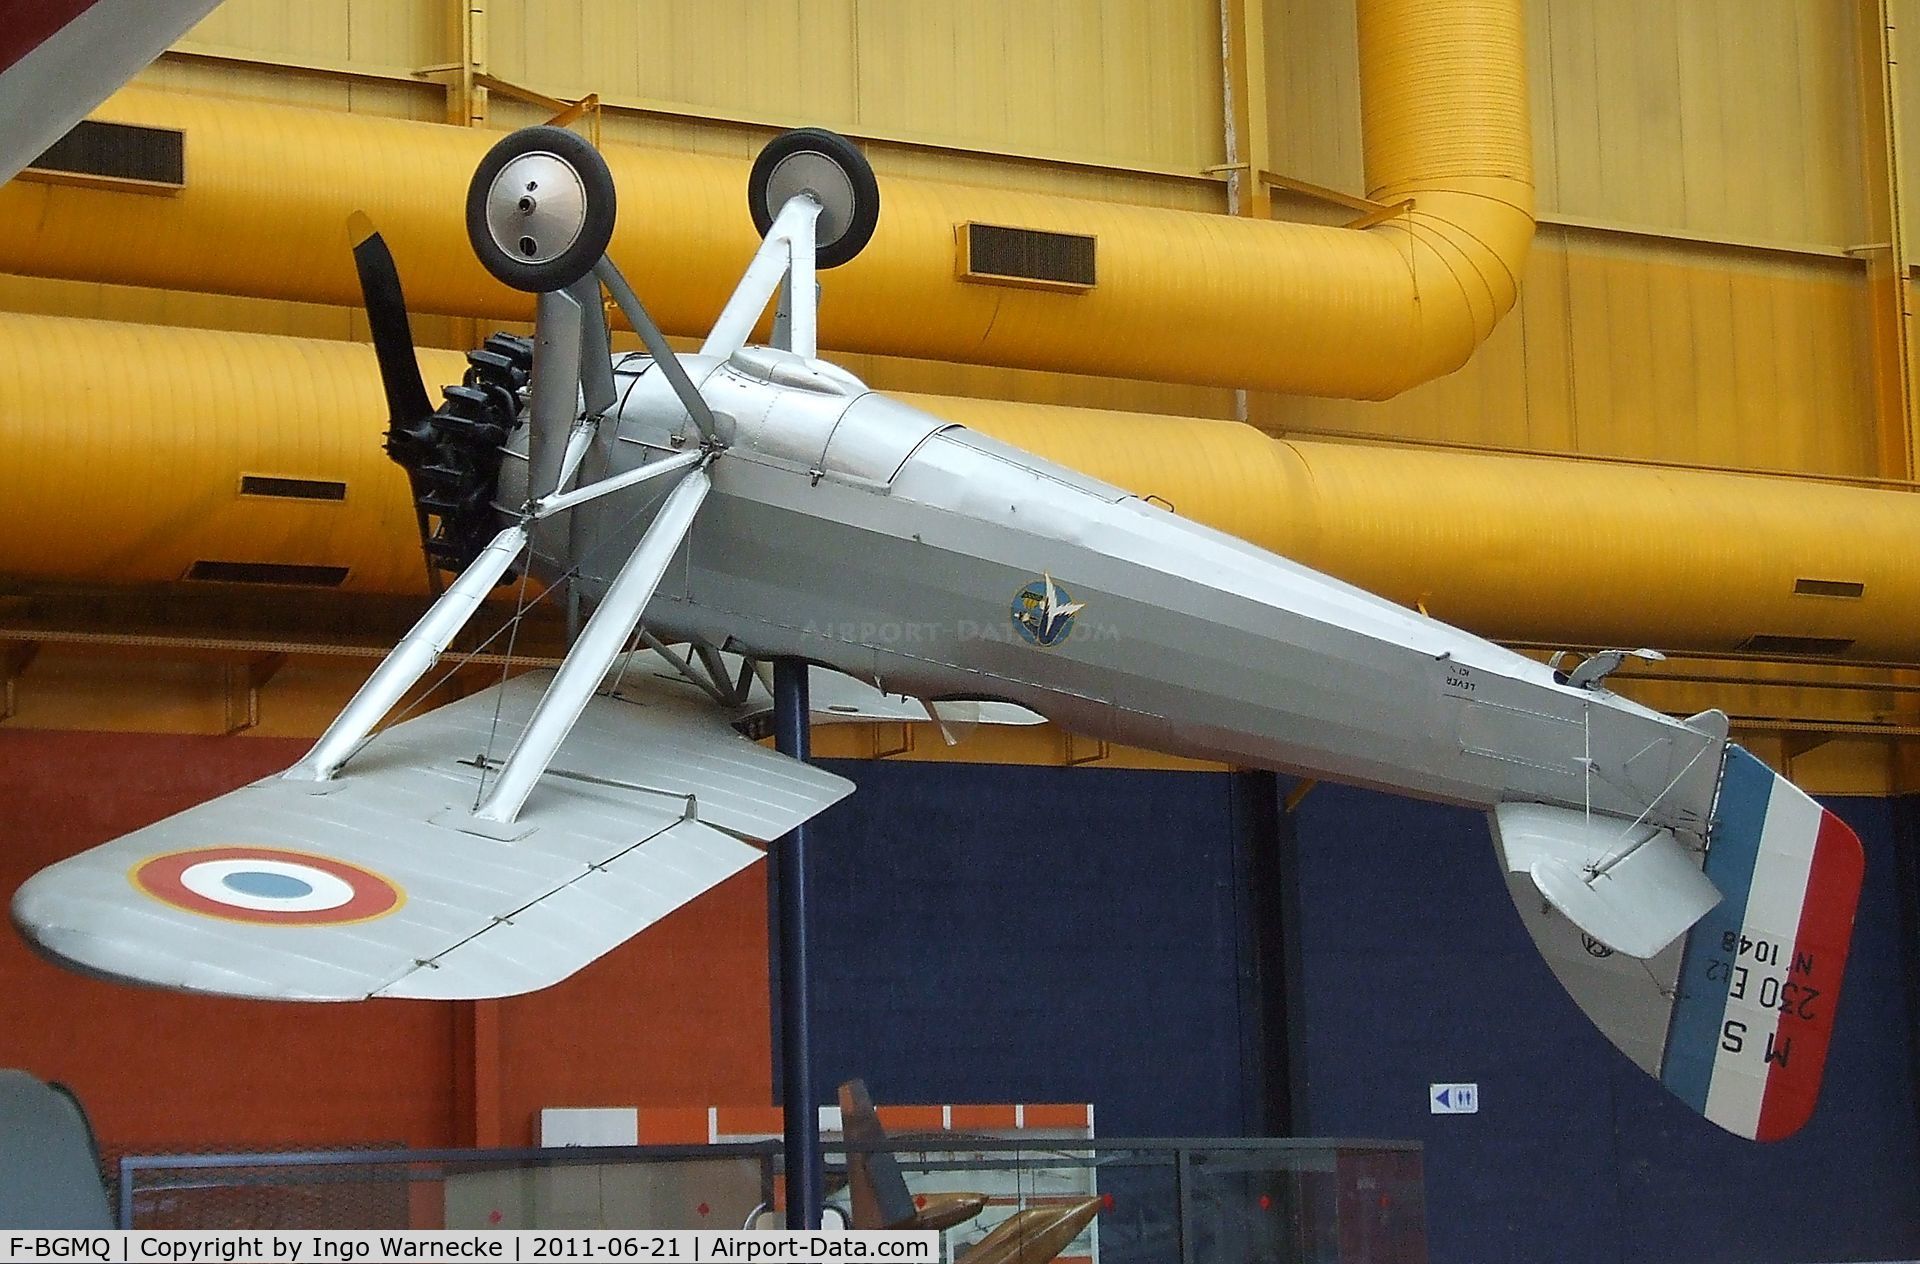 F-BGMQ, Morane-Saulnier MS.230 E12 C/N 1048, Morane-Saulnier MS.230 E12 at the Musee de l'Air, Paris/Le Bourget